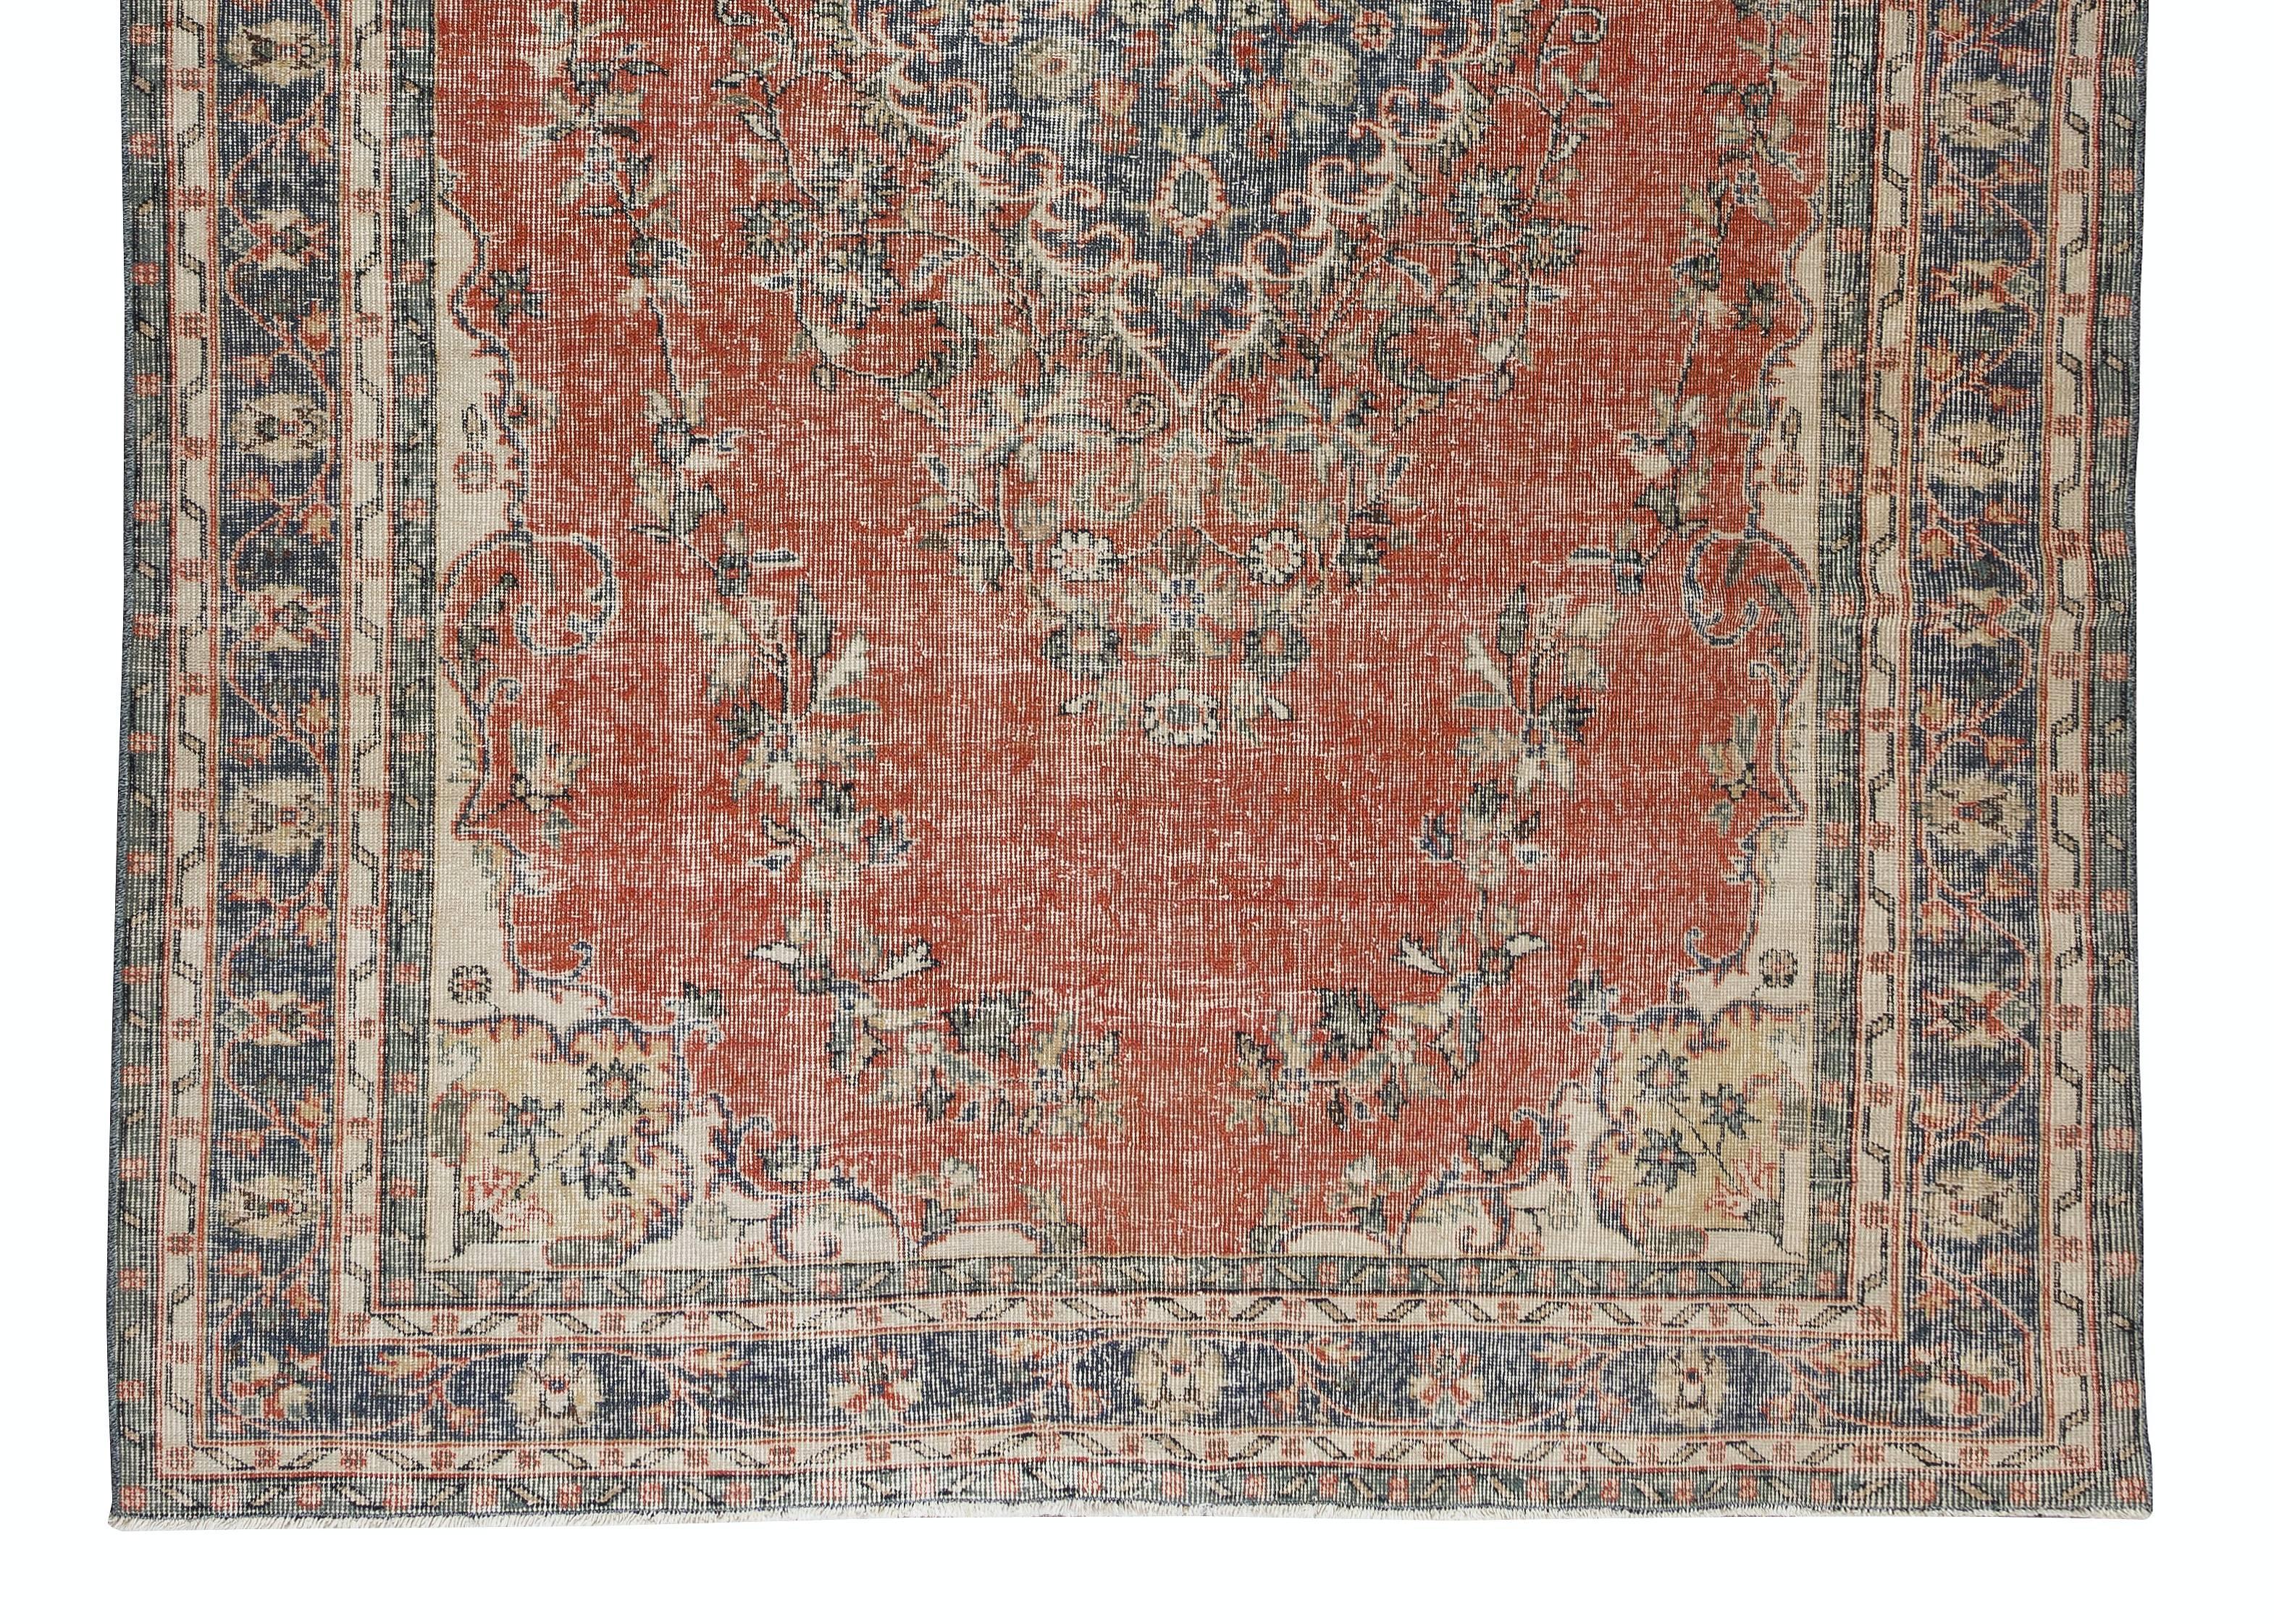 Hand-Woven 6.8x10 Ft Vintage Handmade Turkish Rug for Living Room Decor, Home Decor Carpet For Sale